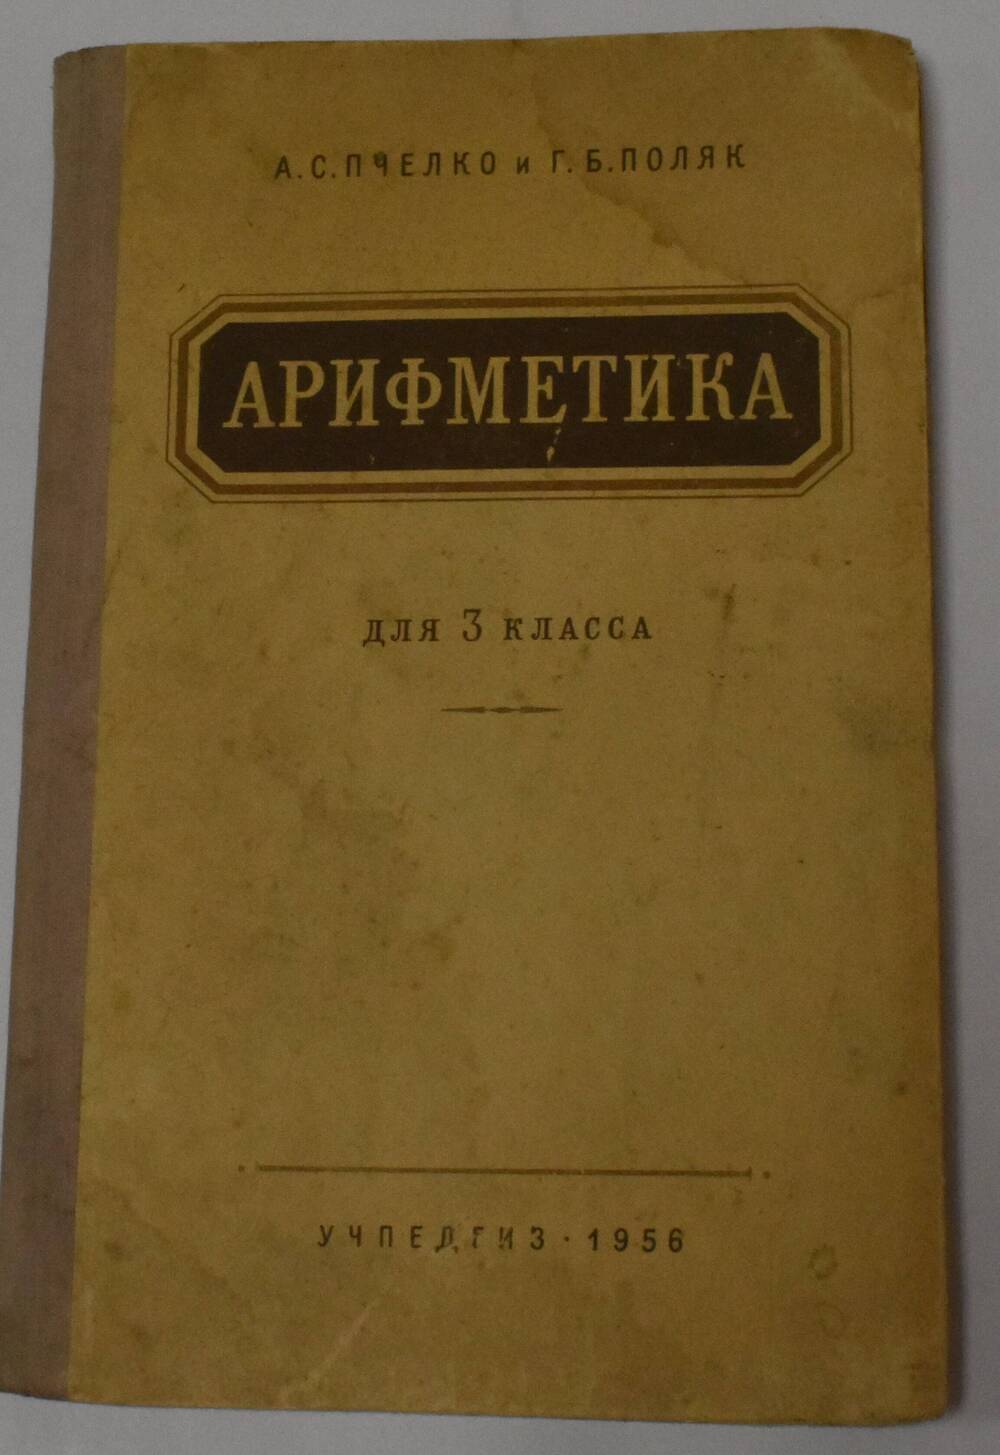 Учебник Арифметика для 3 класса под ред.  А.С. Пчелко, Г.Б. Поляк